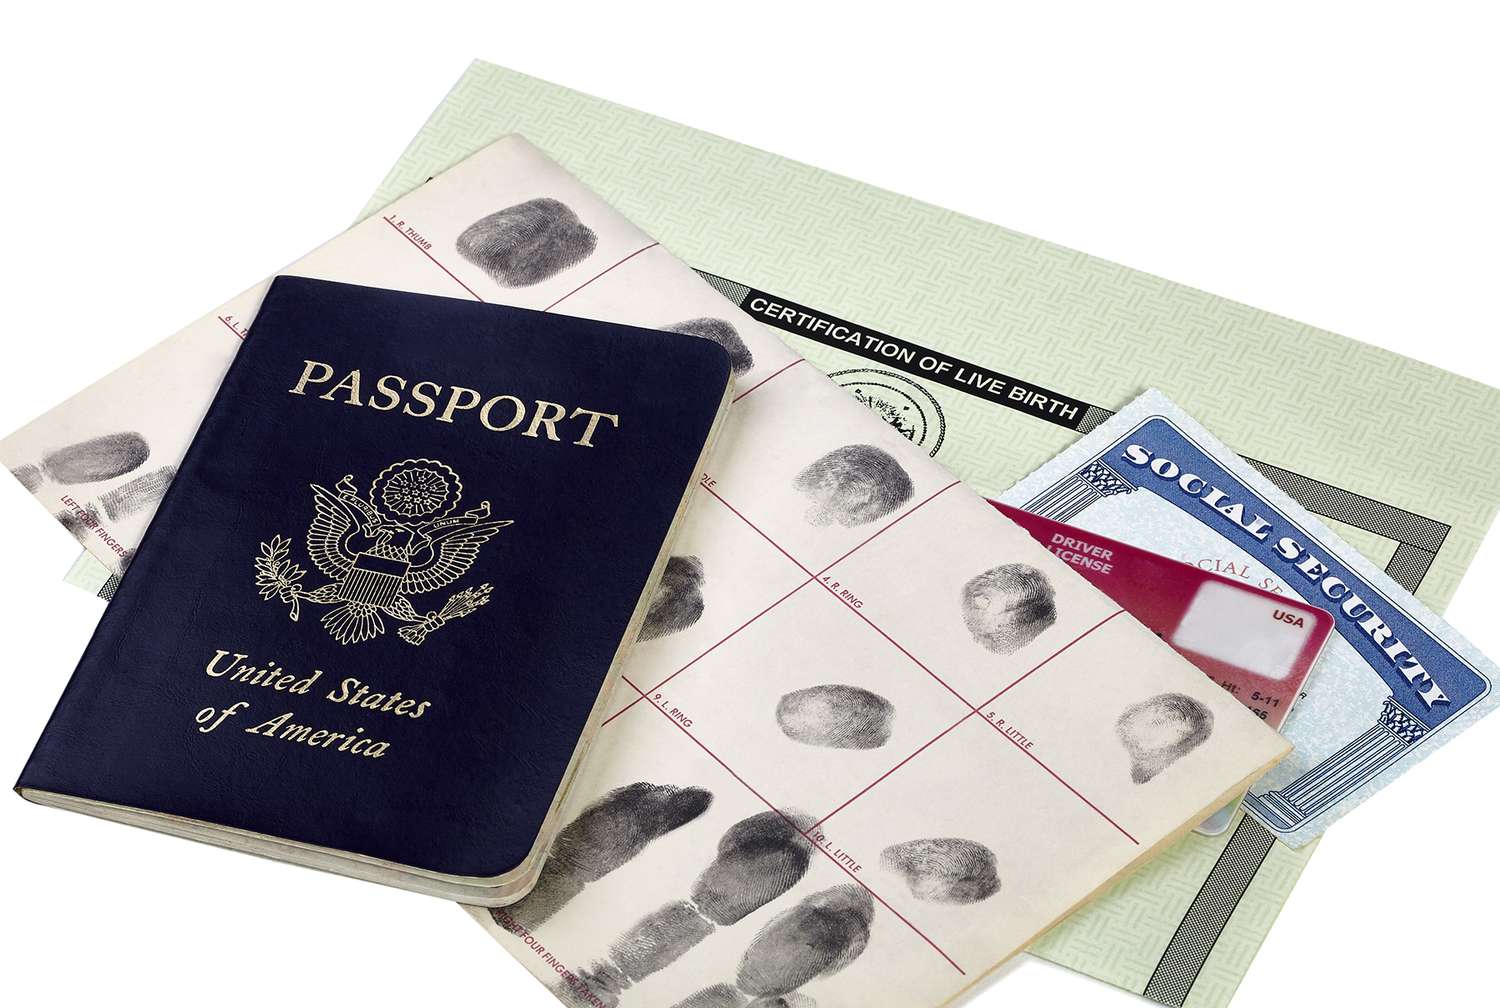 Passport, birth certificate